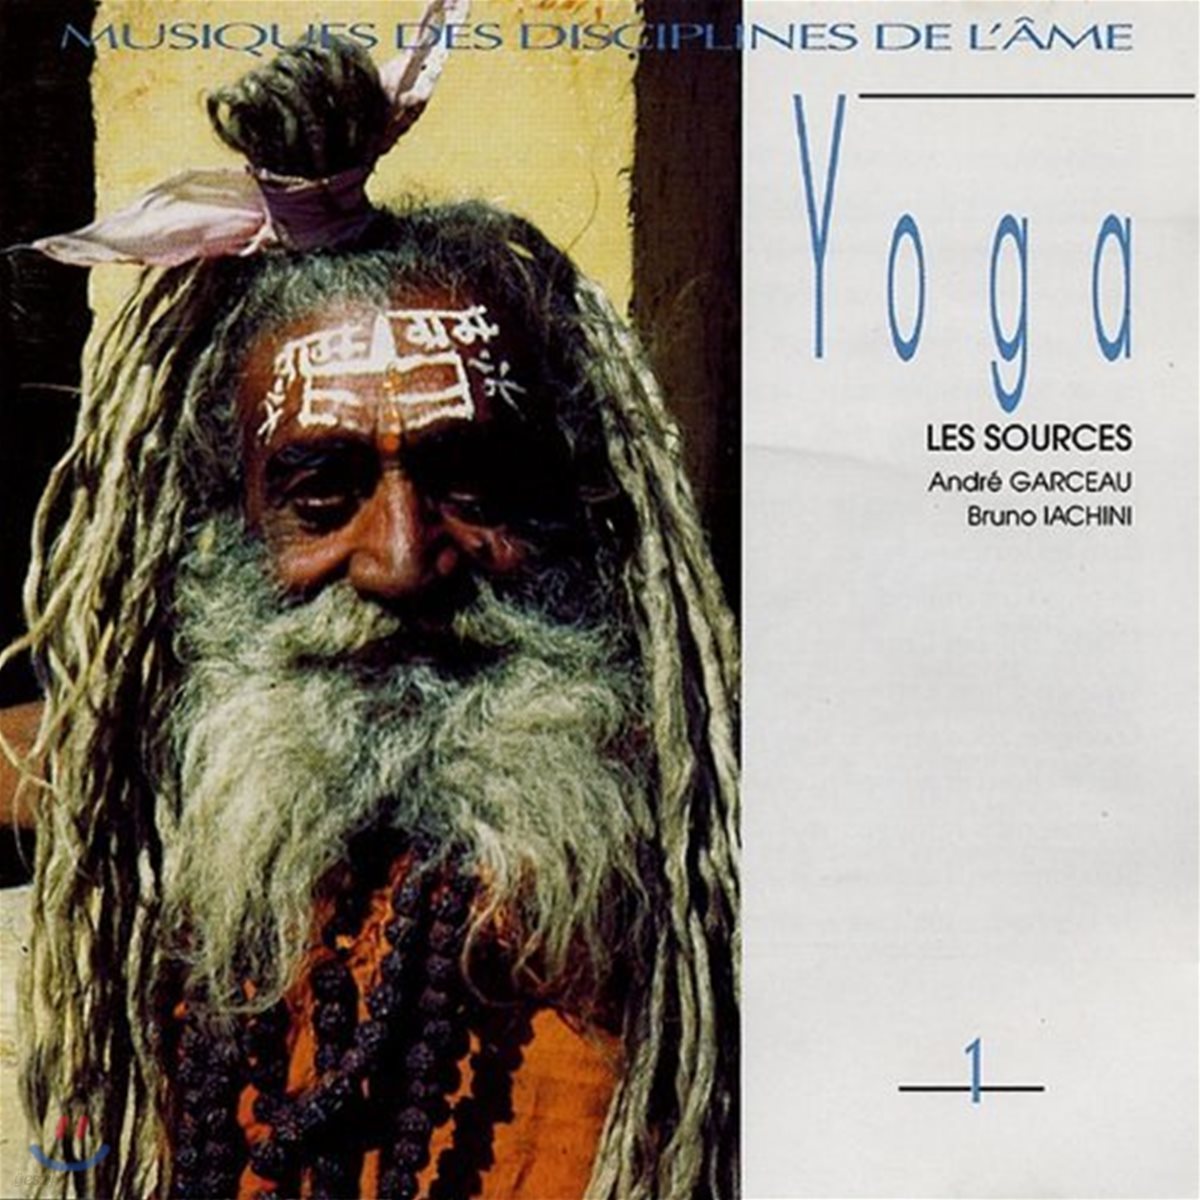 Andre Garceau &amp; Bruno Iachini - Yoga Volume 1 Les Sources